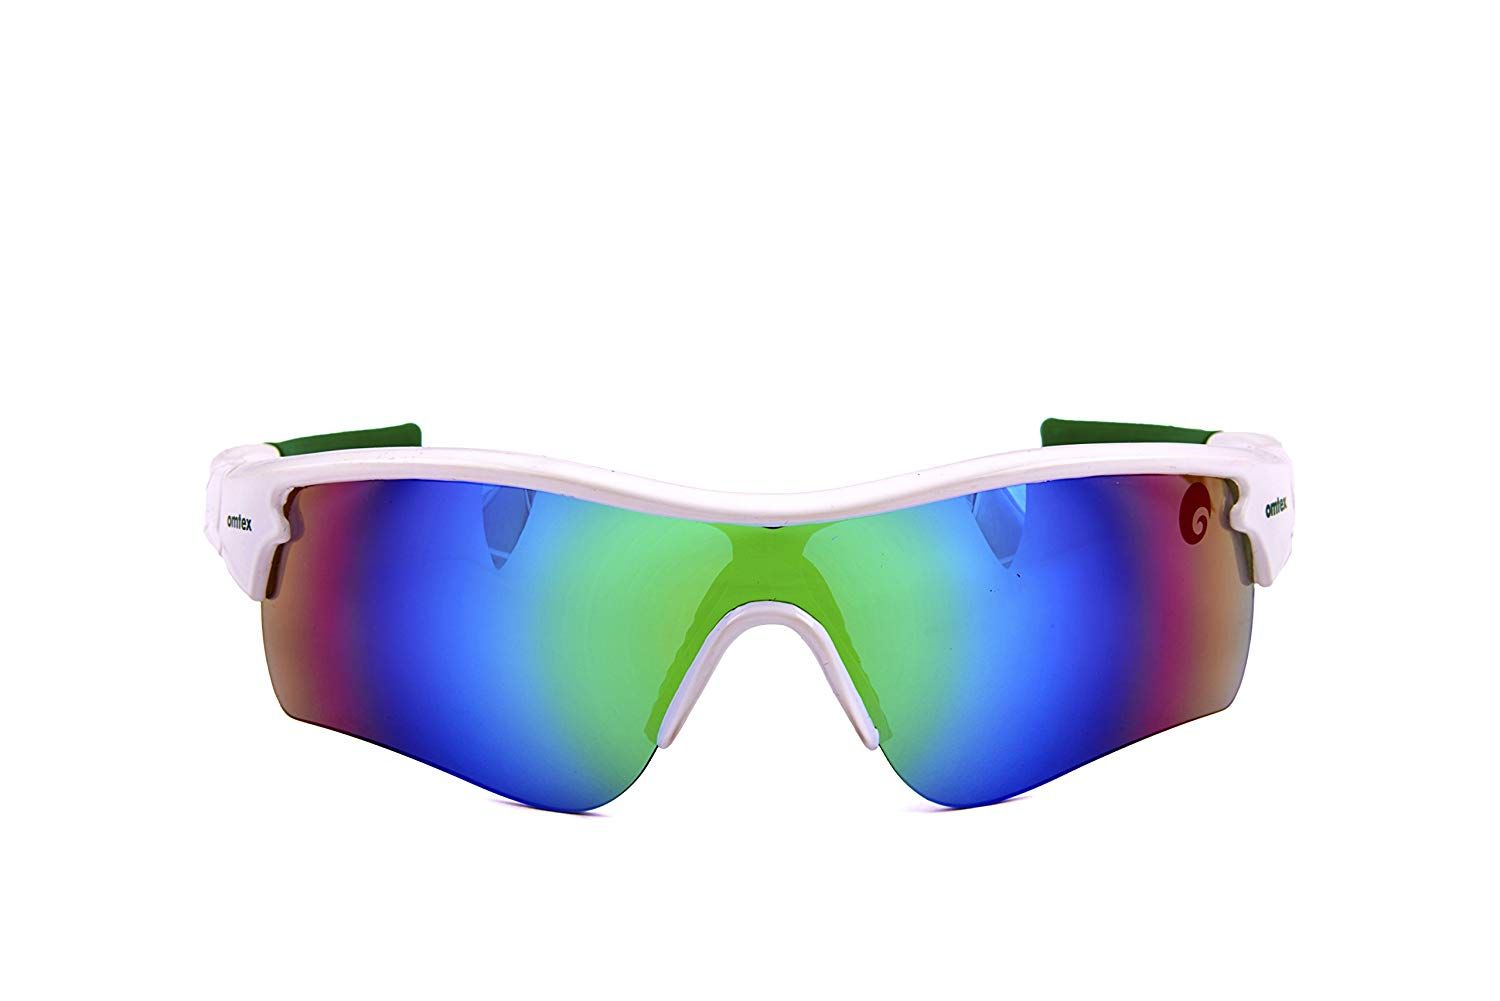 Omtex Mens Outdoor Sports Sunglasses (Green )